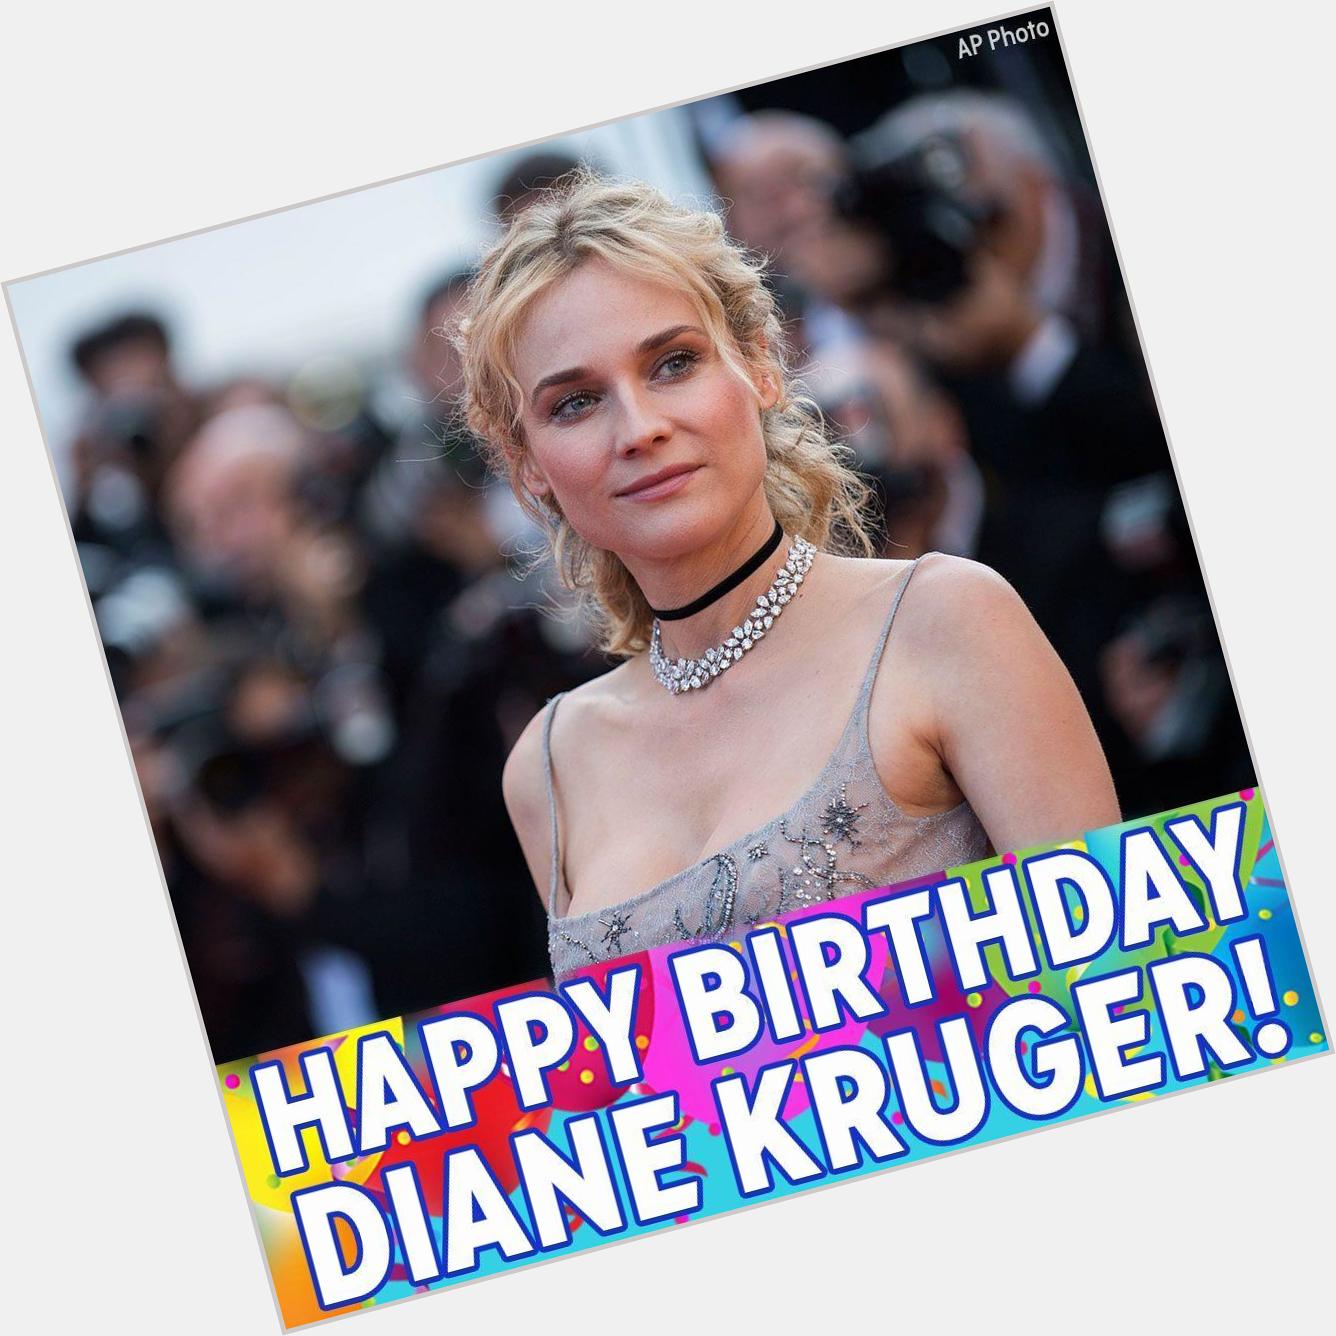 Happy Birthday to actress Diane Kruger! 